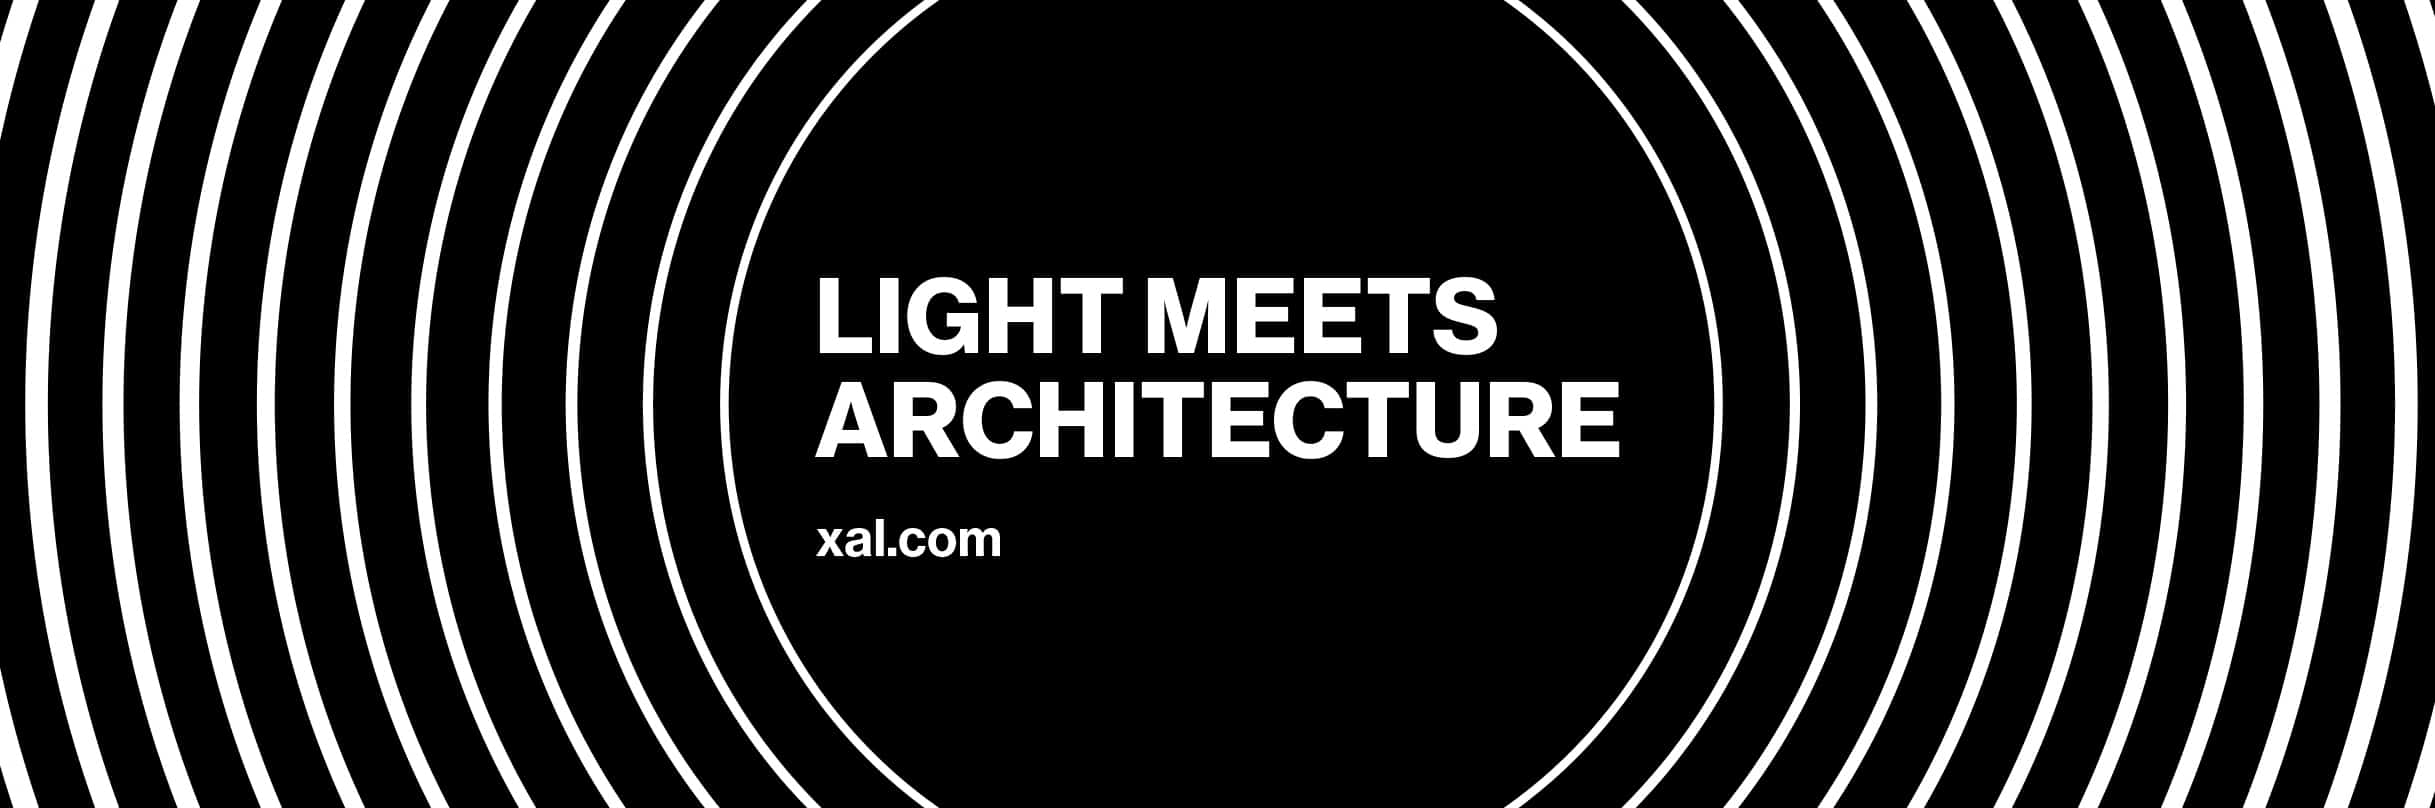 LIGHT MEETS ARCHITECTURE